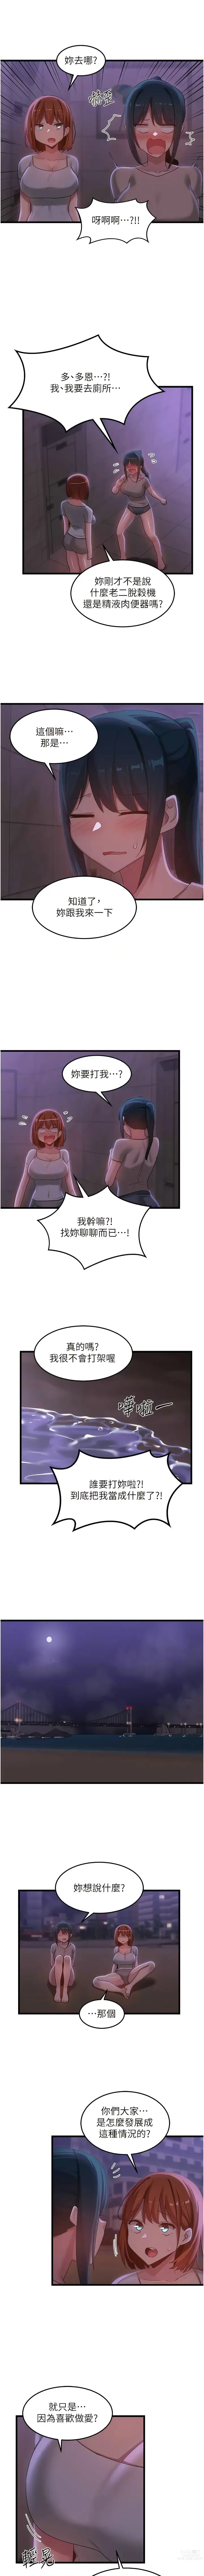 Page 520 of manga 深度交流會 67-109